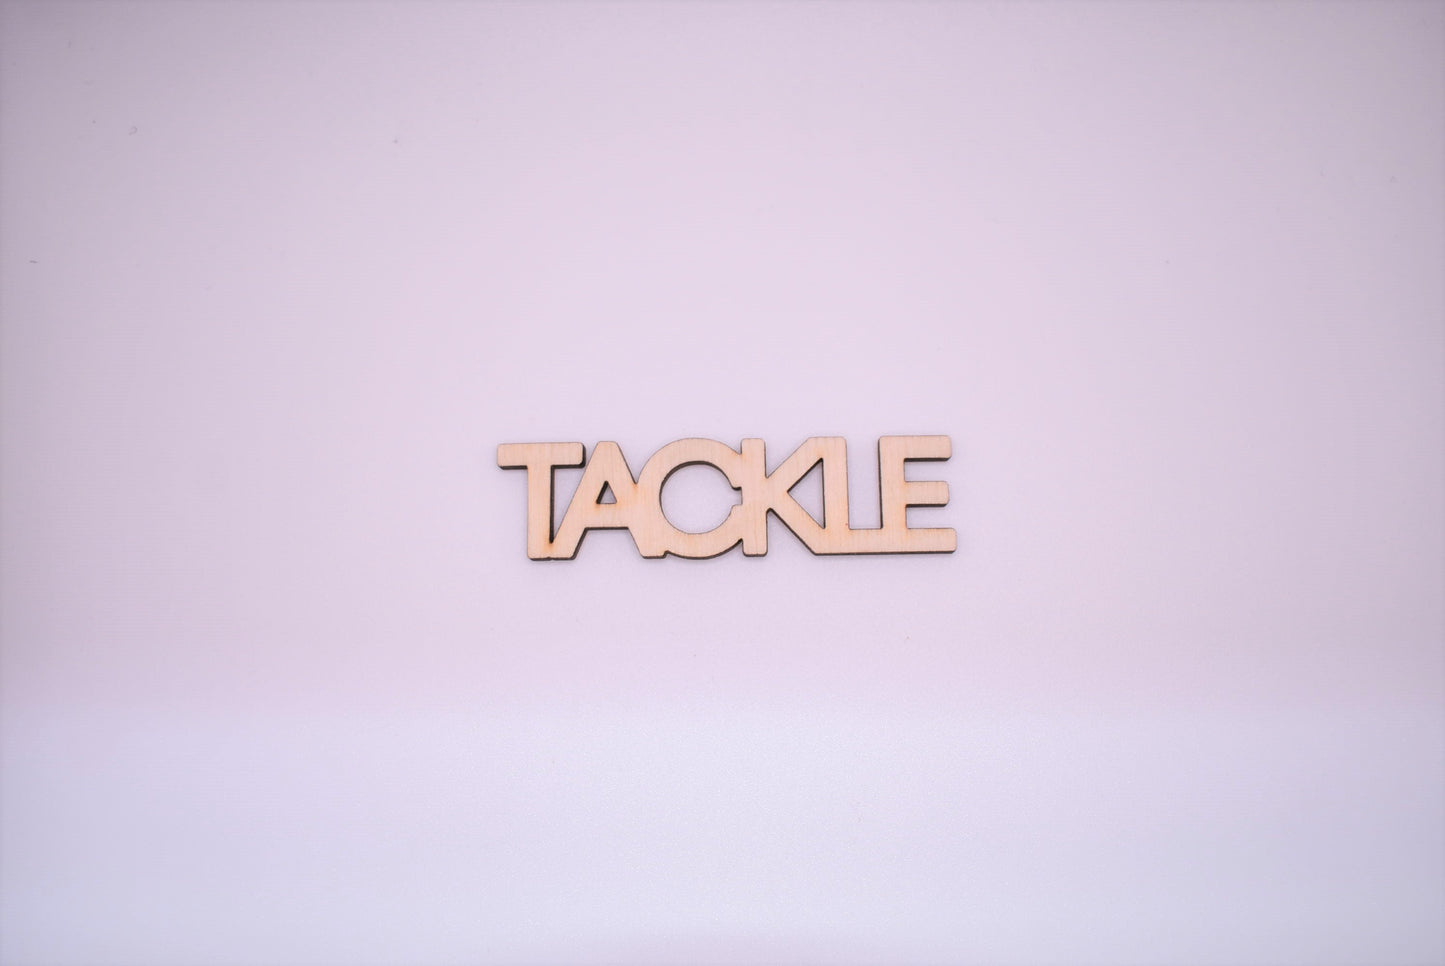 Tackle - Creative Designs By Kari